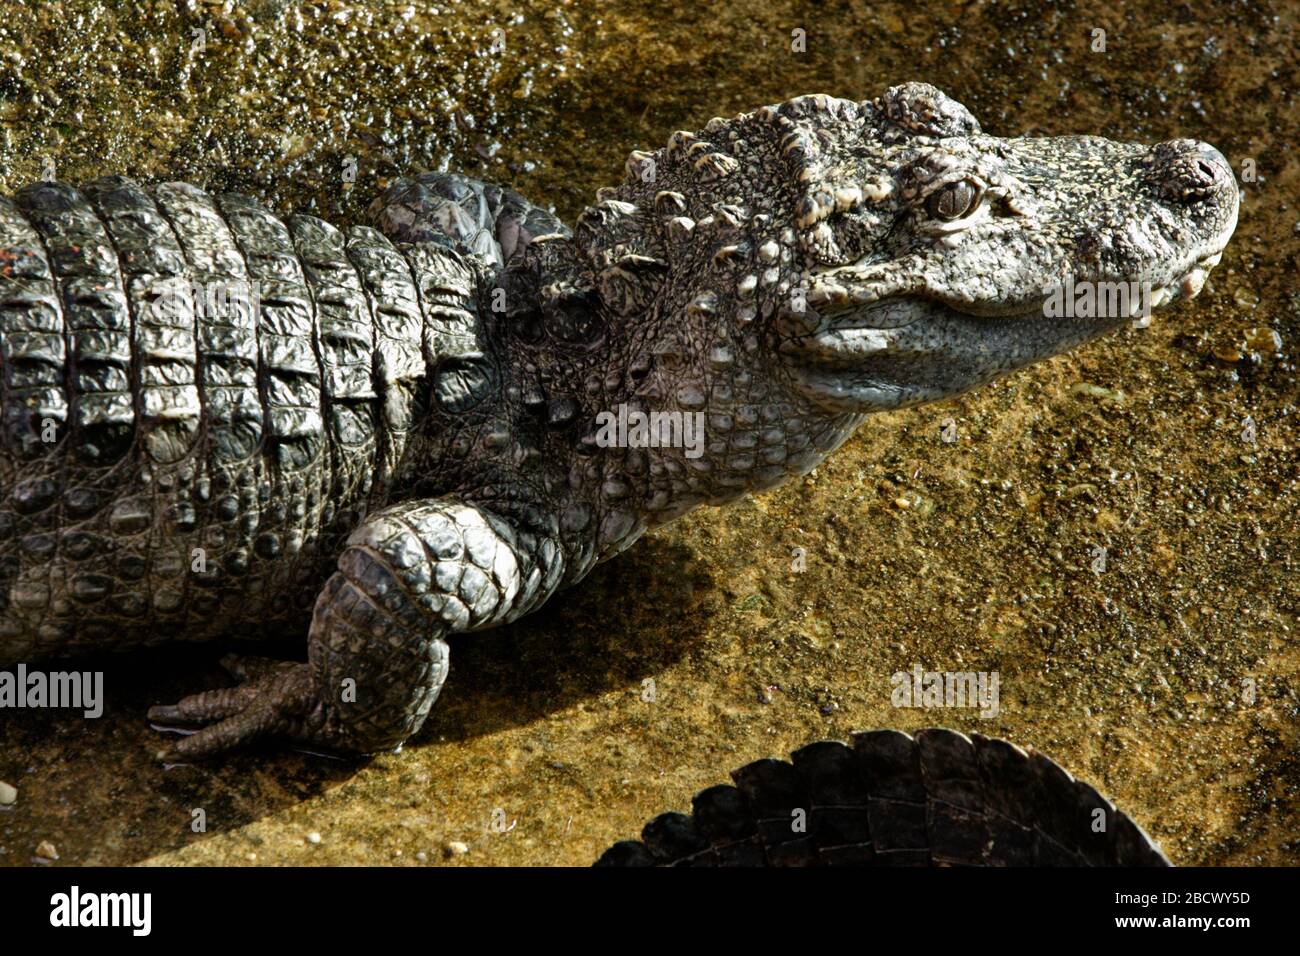 Chinese Alligator. Species: sinensis,Genus: Alligator,Family: Crocodylidae,Order: Crocodylia,Class: Reptilia,Phylum: Chordata,Kingdom: Animalia,reptile,crocodilians Chinese Alligator Stock Photo